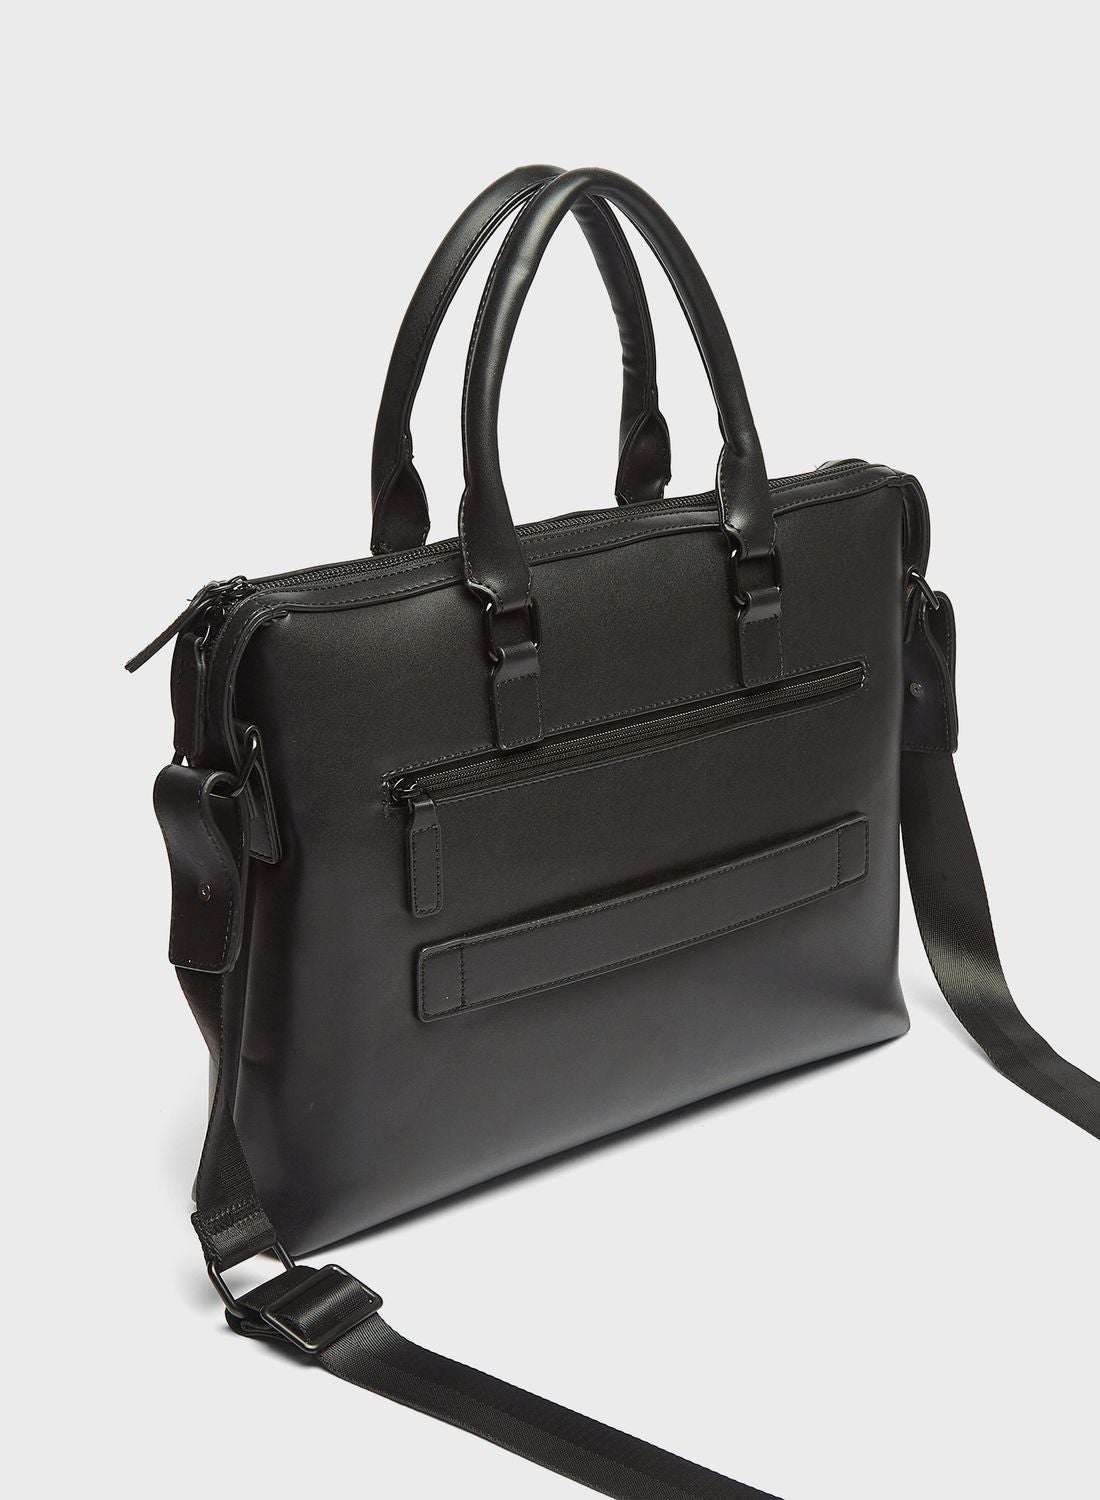 Martucci Casual Crossbody Synthetic Leather Men Sling Bag/Shoulder Bag for  Men/Travel Bag/Cross Body